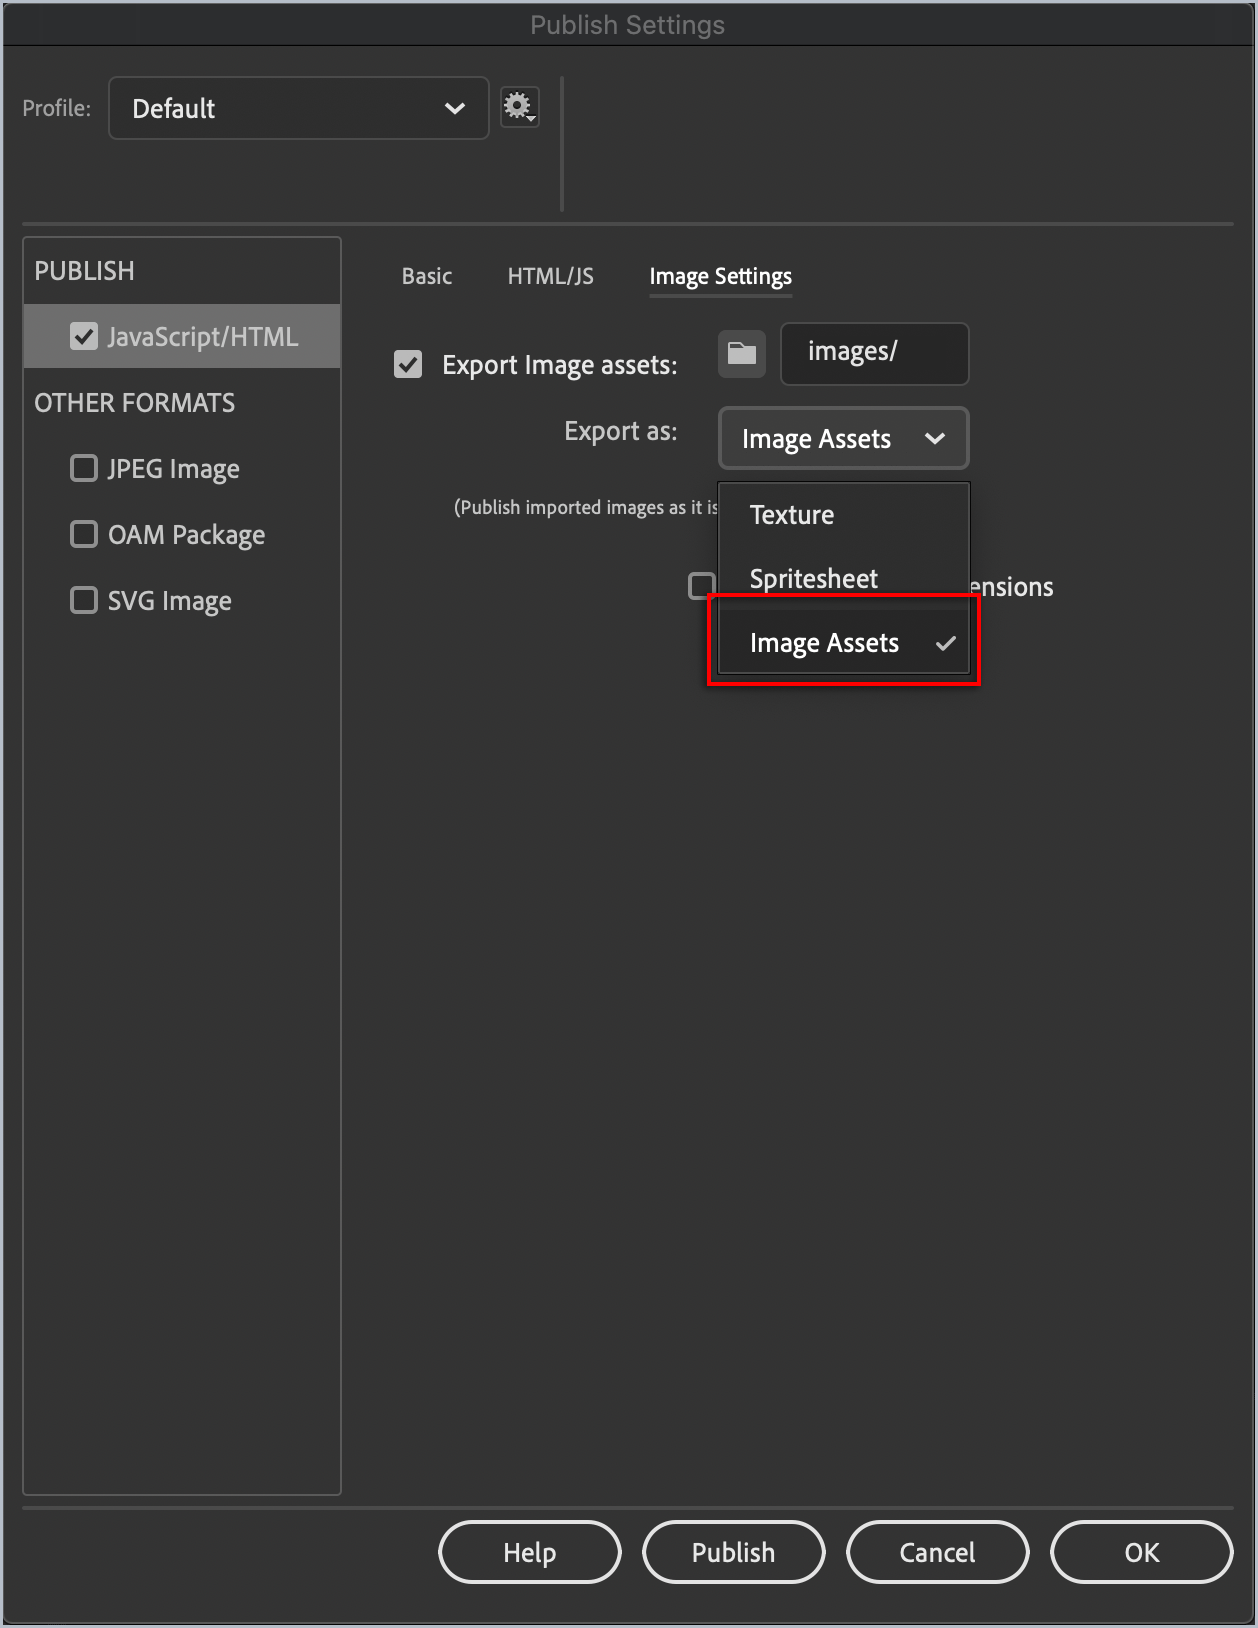 AdobeAnimate_publish-settings_tab-ImageSettings.png